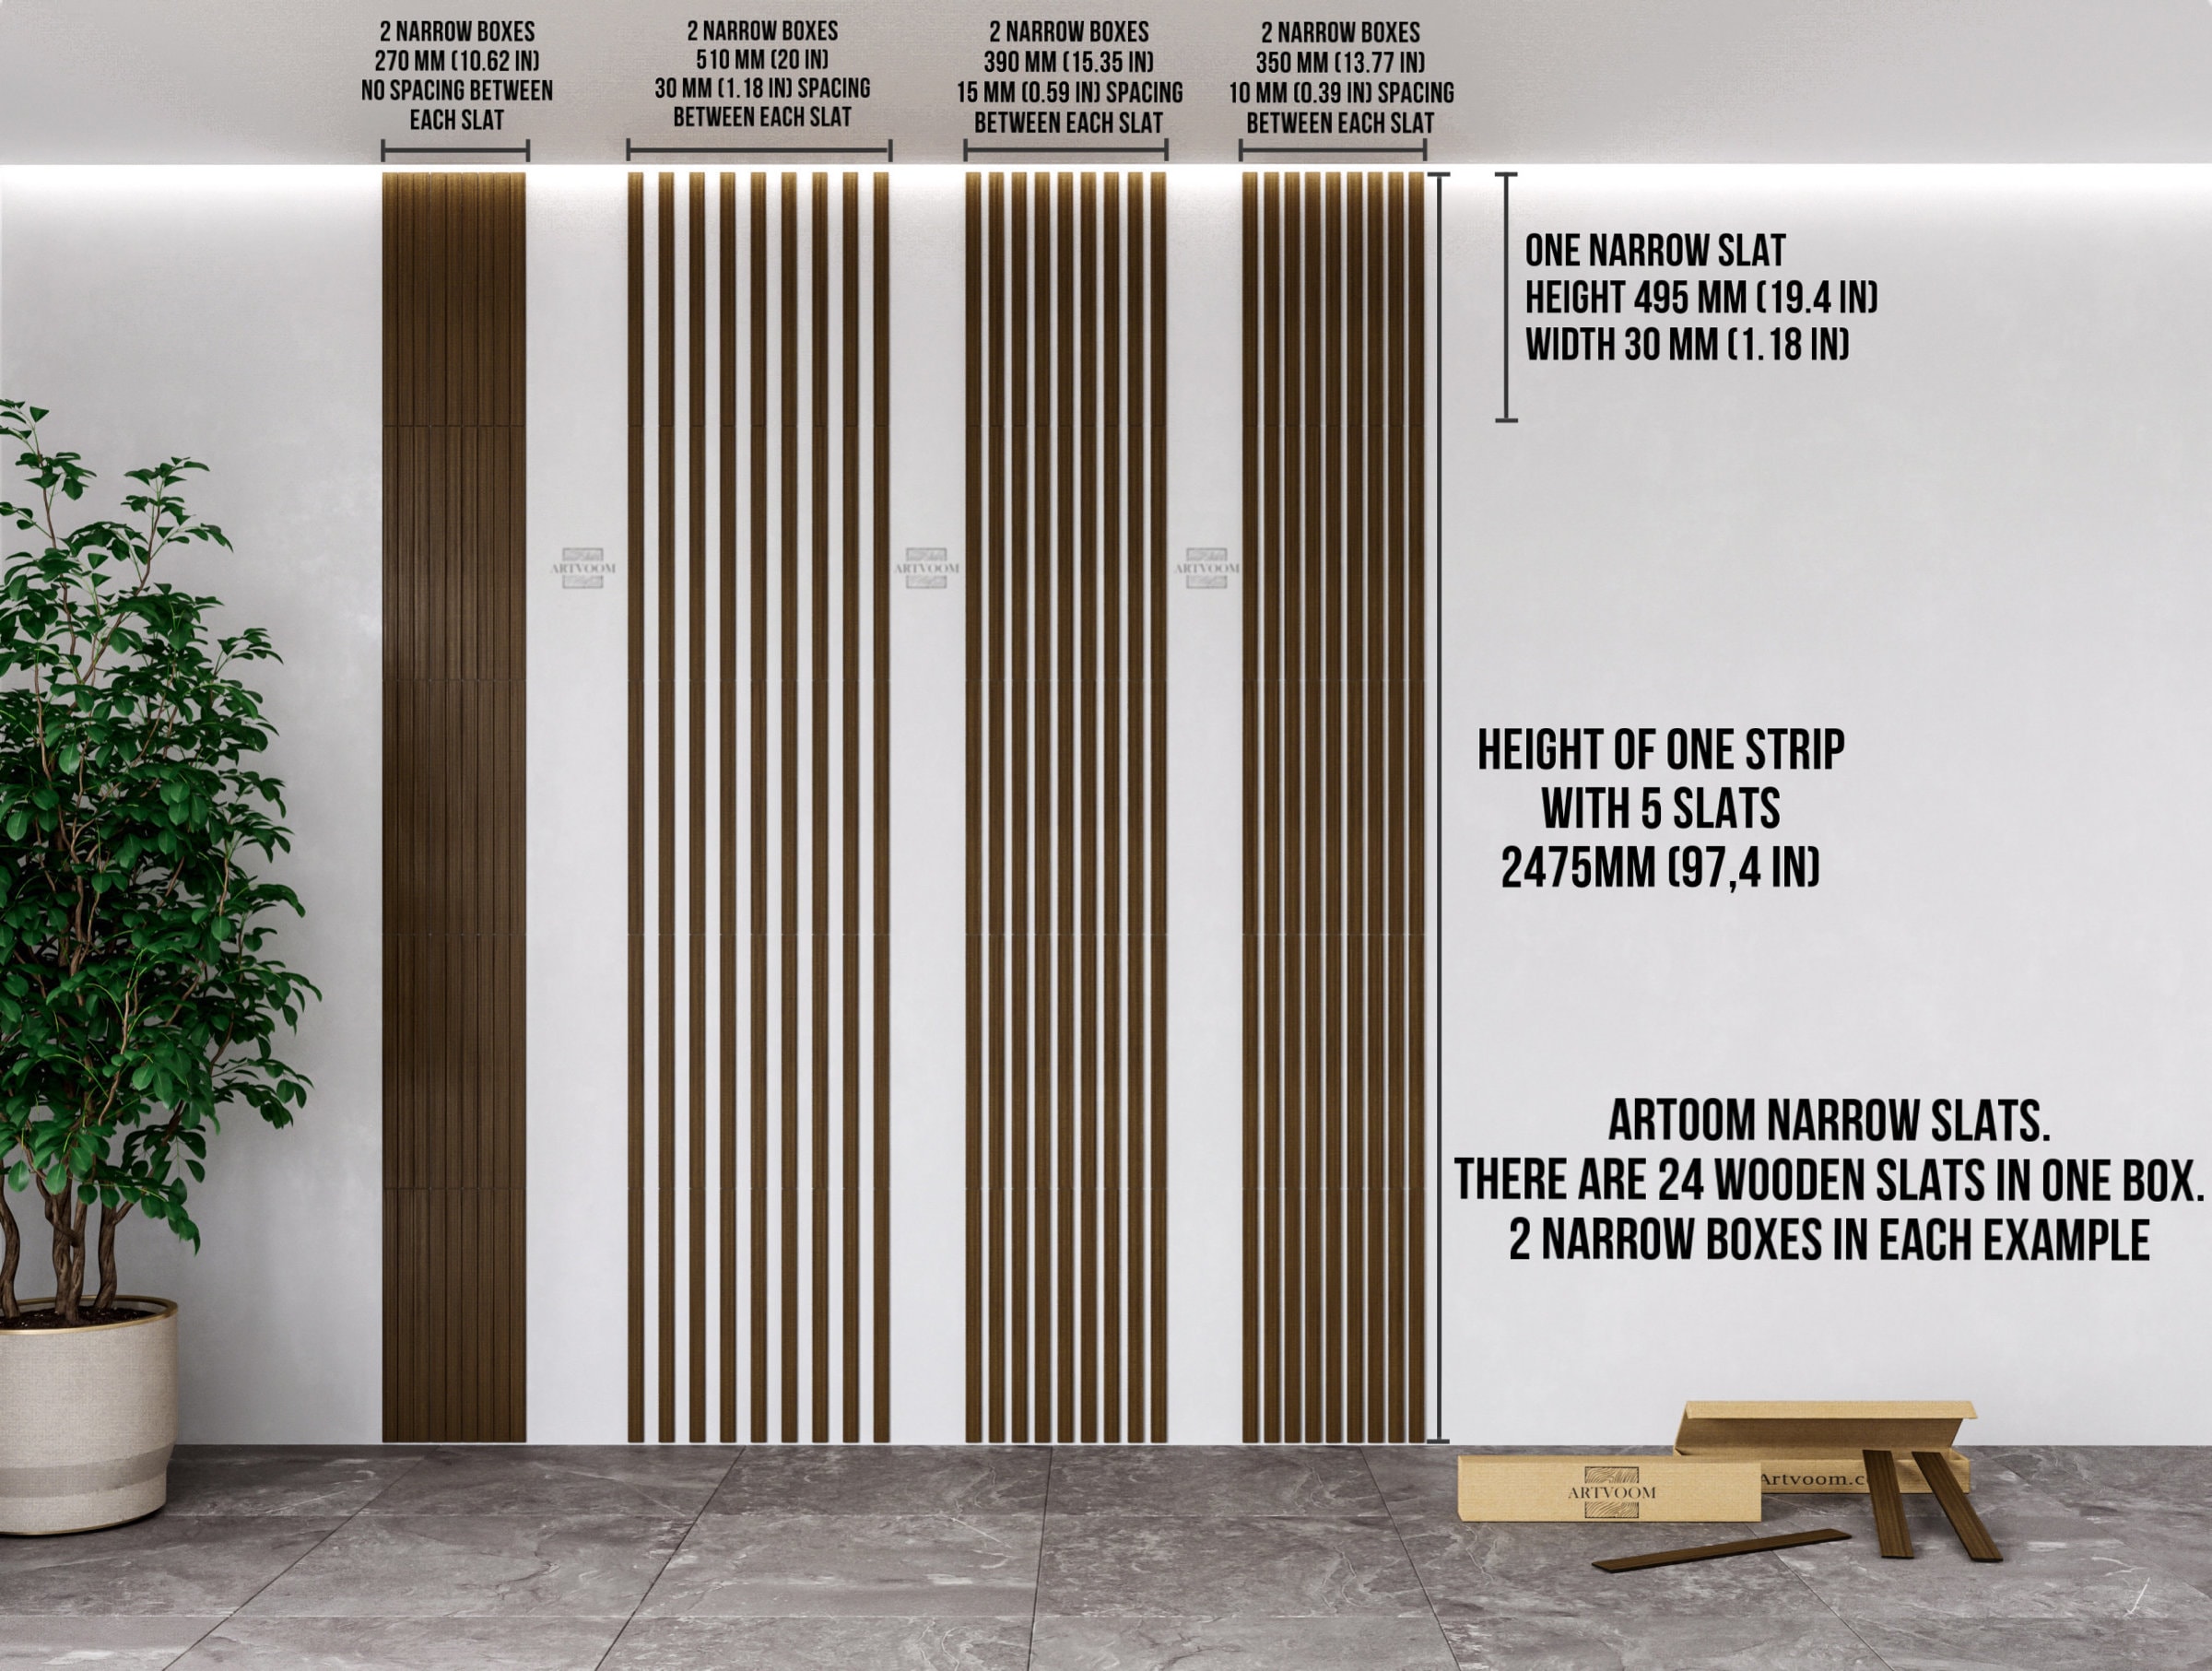 Oak Wooden Wall Slats Narrow Size 3D Wall Panels Wooden Slats Wood